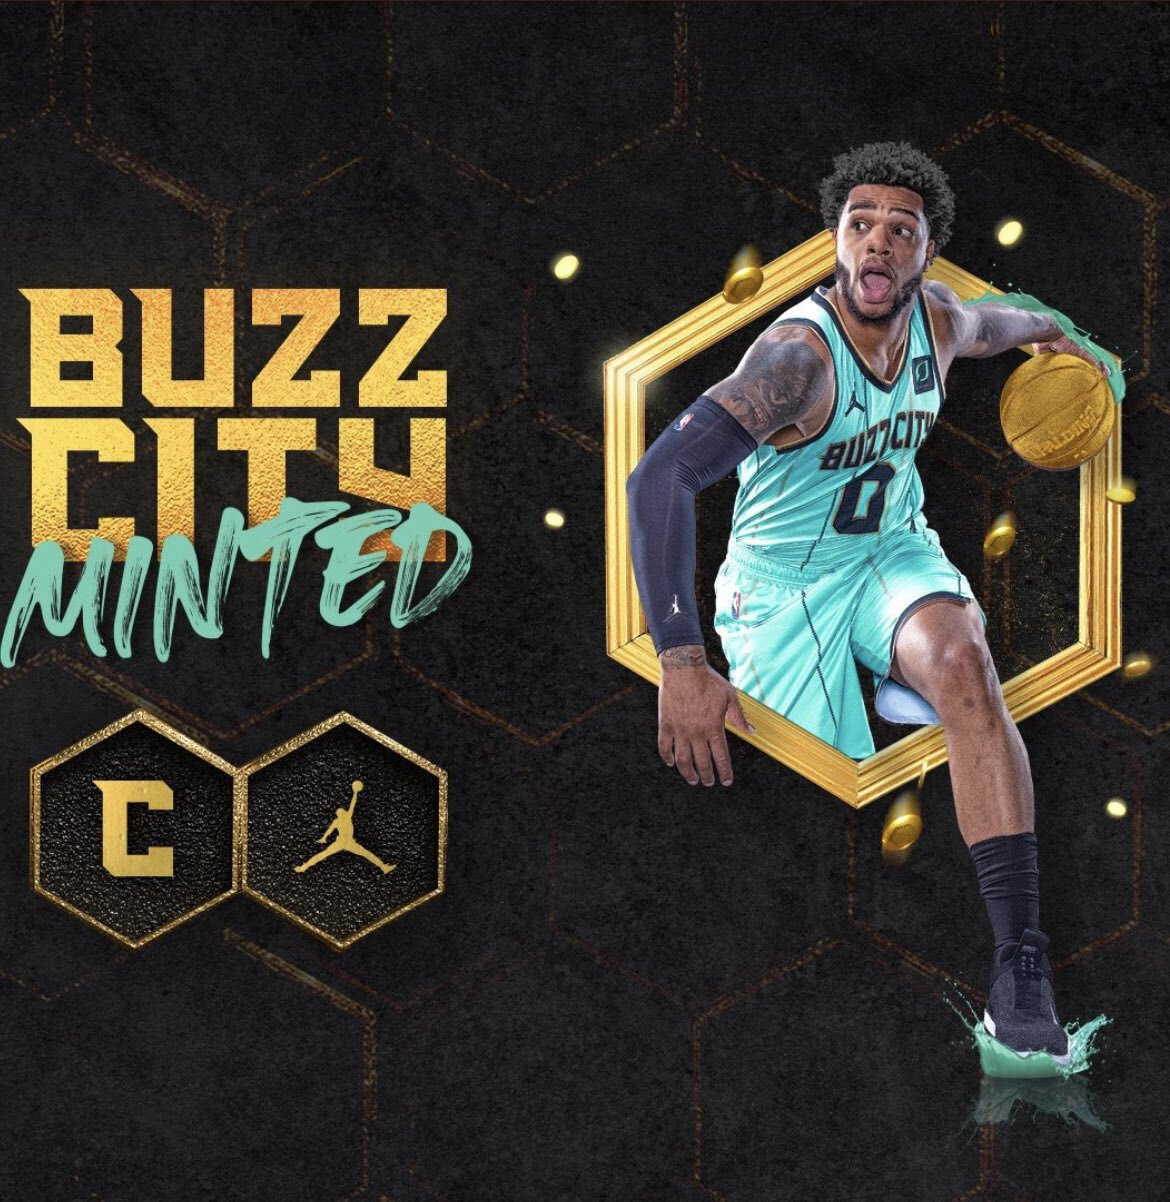 City jerseys are the definition of alternate jerseys. Charlotte Hornets New Buzz City Uniform Uniswag